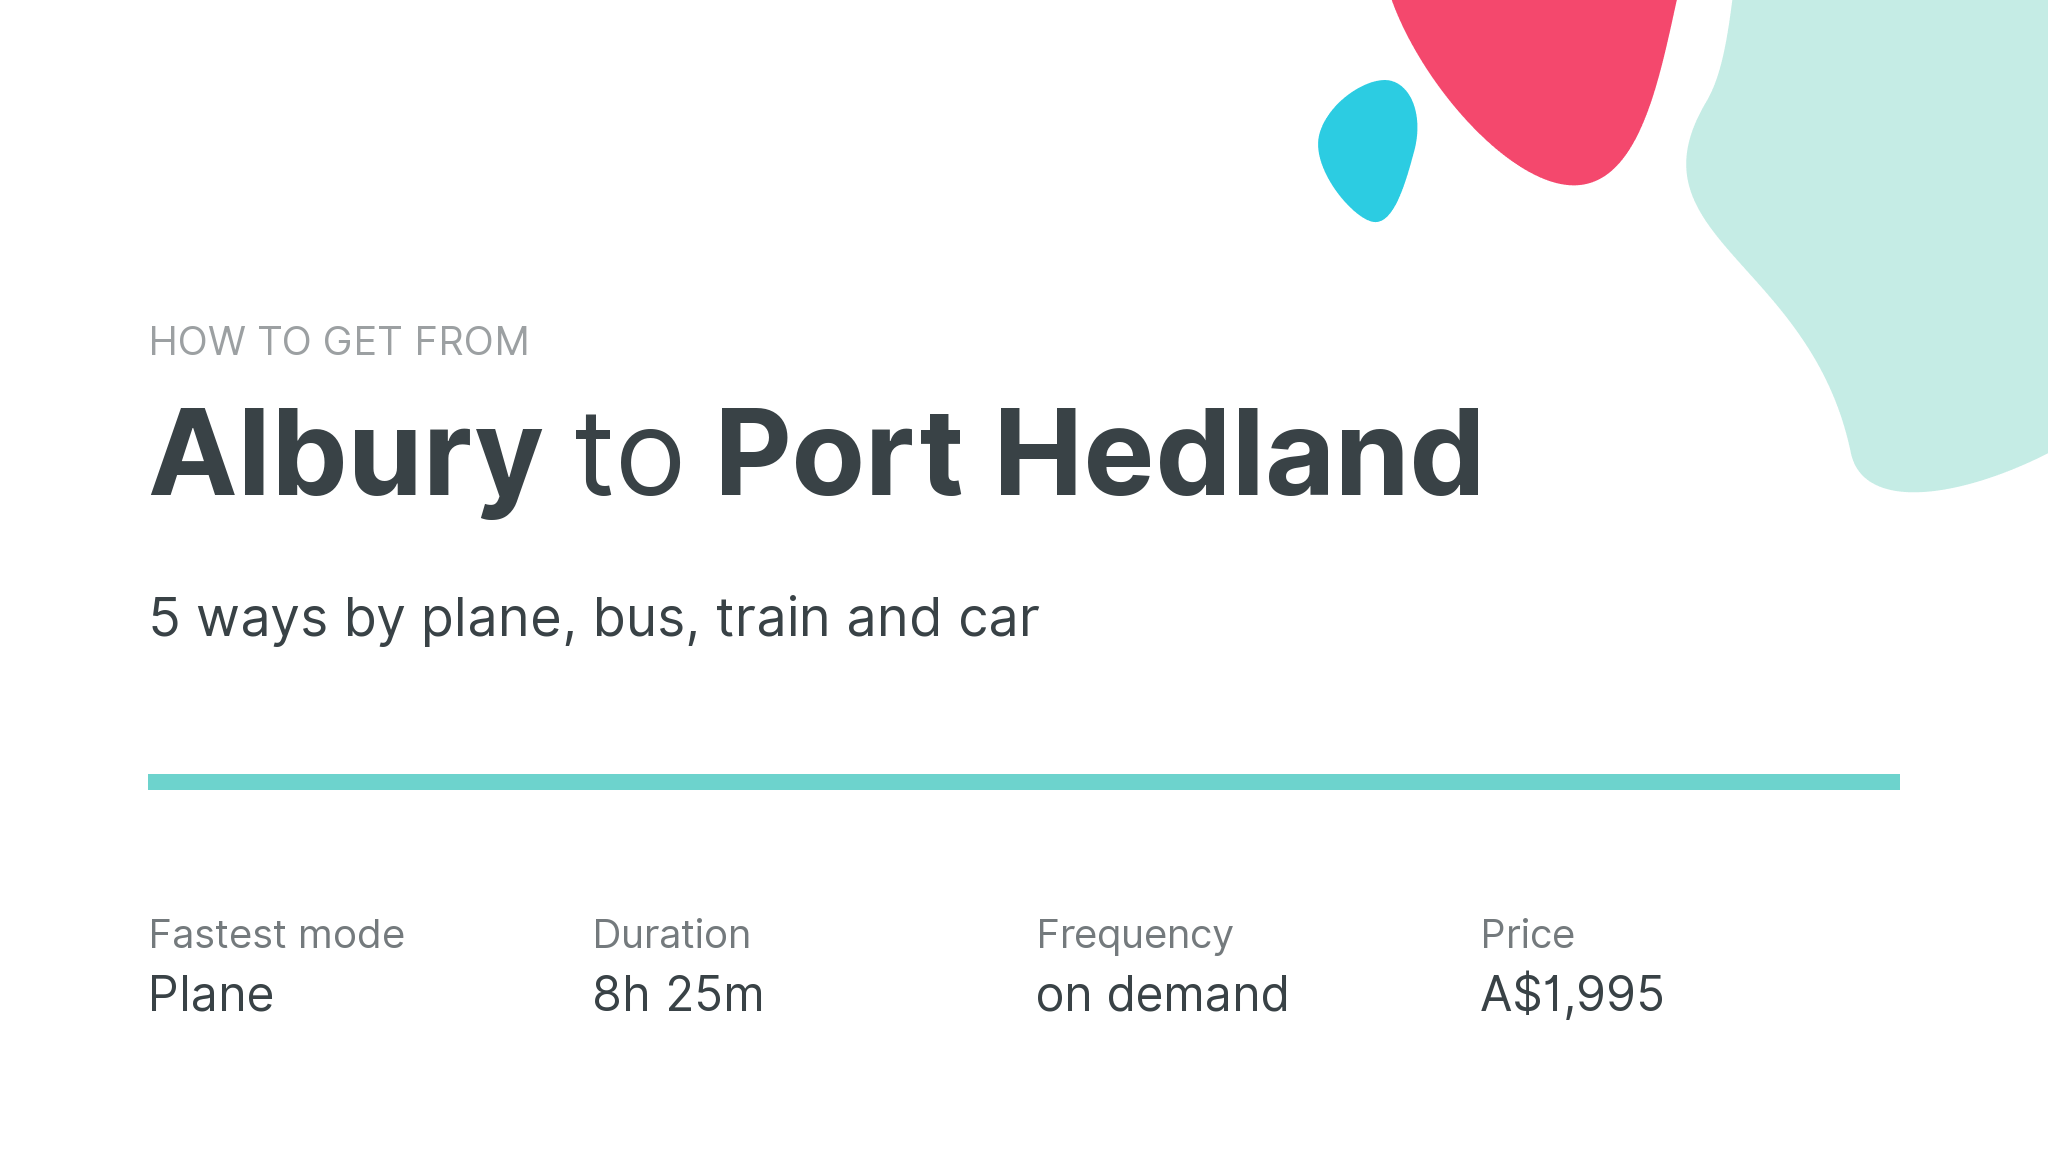 How do I get from Albury to Port Hedland